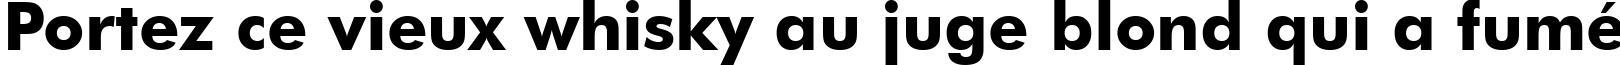 Пример написания шрифтом Futura Bold BT текста на французском